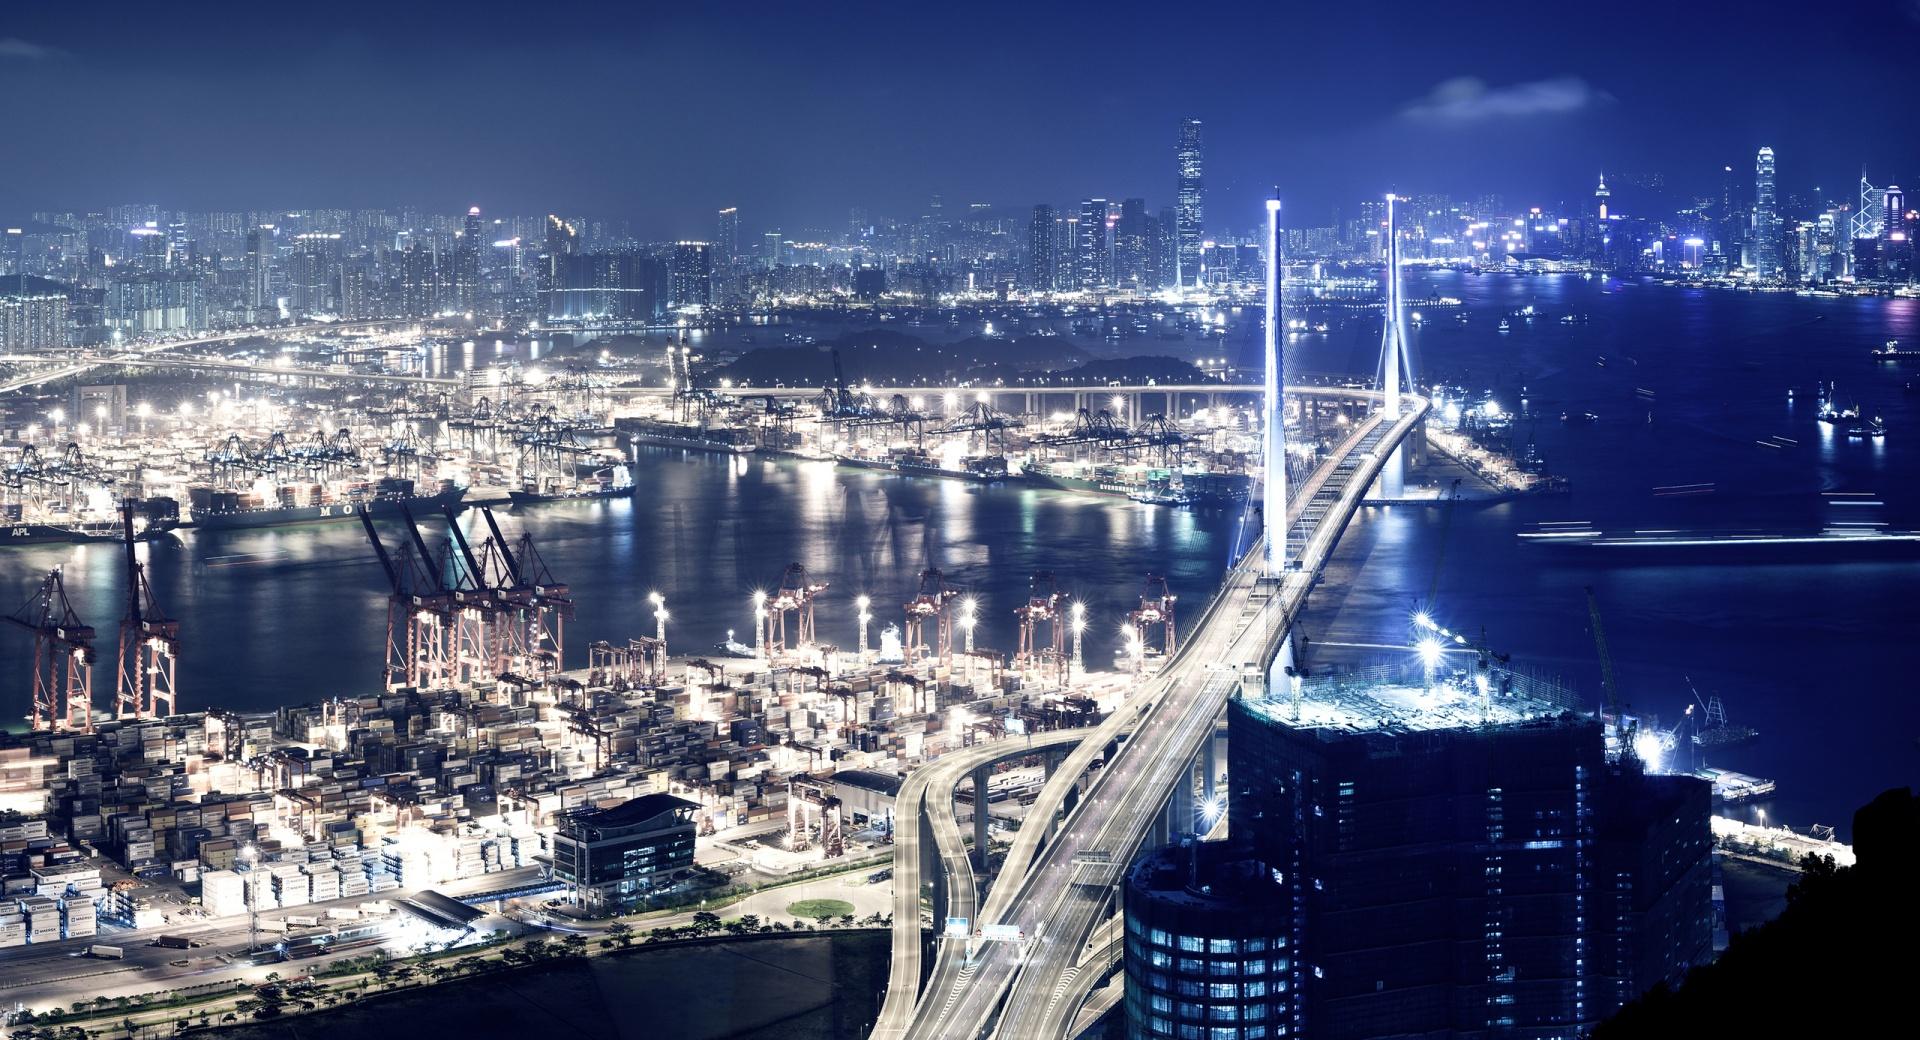 Panoramic View Of Hong Kong At Night at 1600 x 1200 size wallpapers HD quality